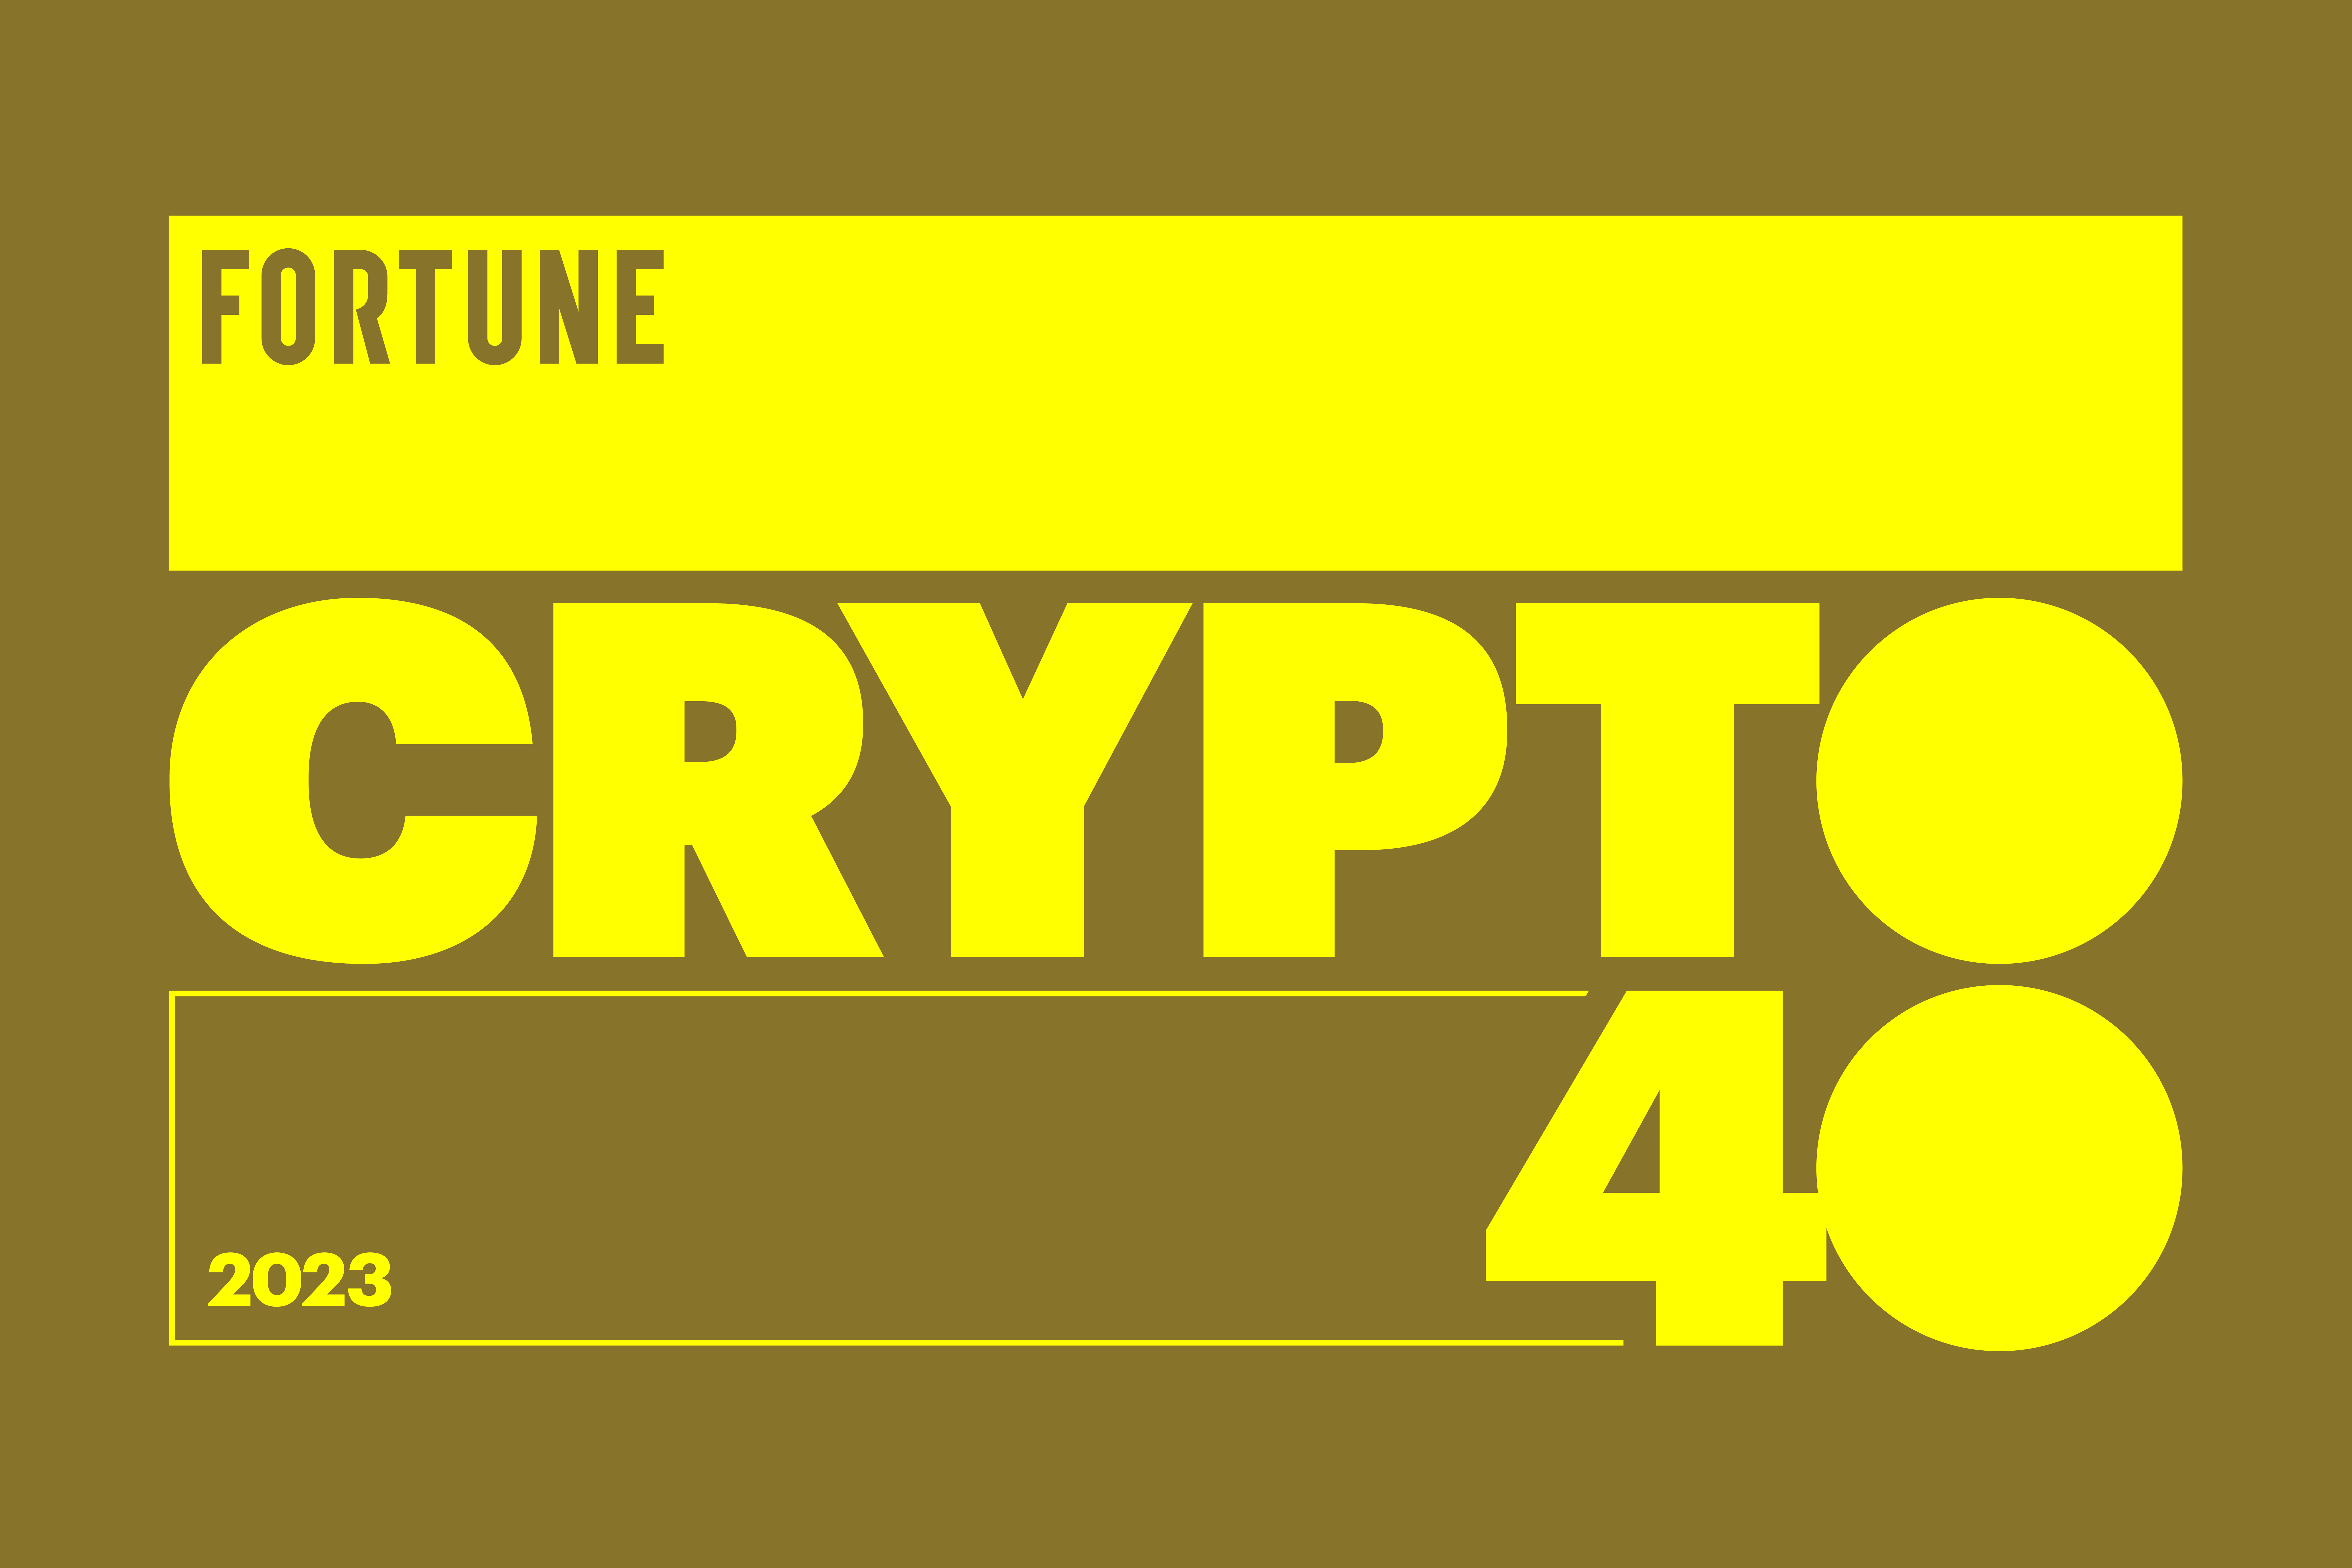 Fortune Crypto 40 Logo links to website